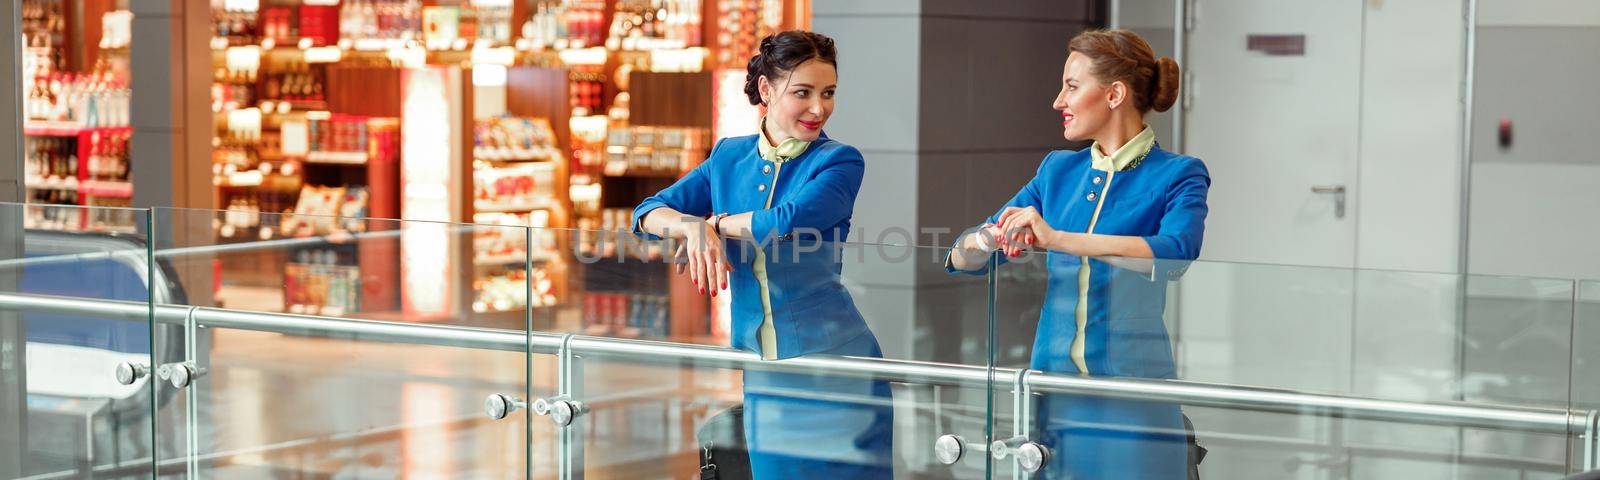 Female flight attendants waiting for plane in airport terminal by Yaroslav_astakhov